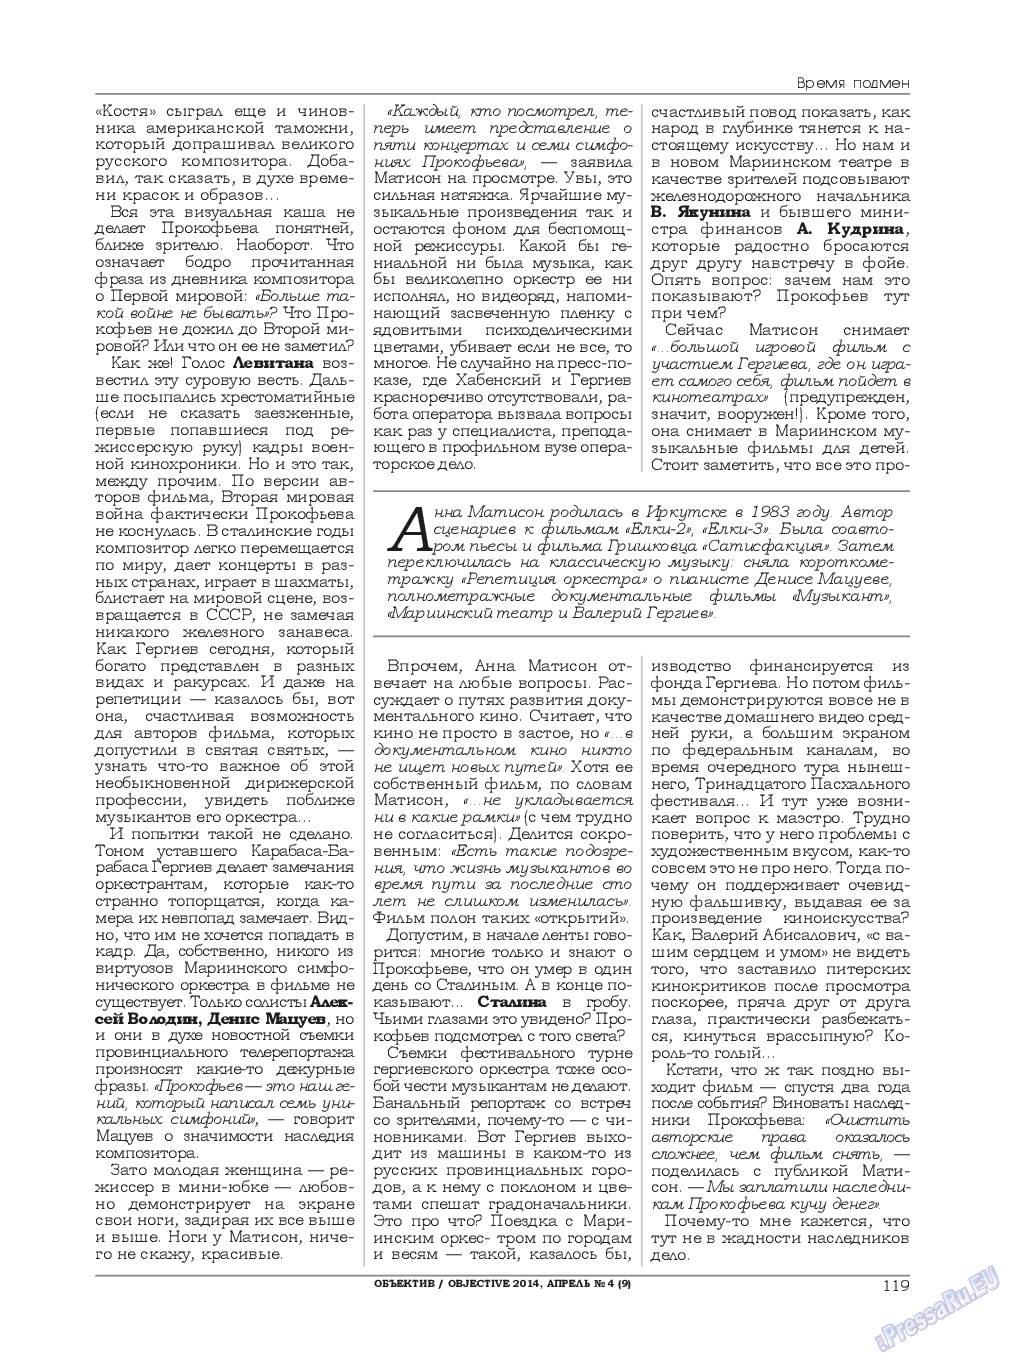 Объектив EU, журнал. 2014 №4 стр.119